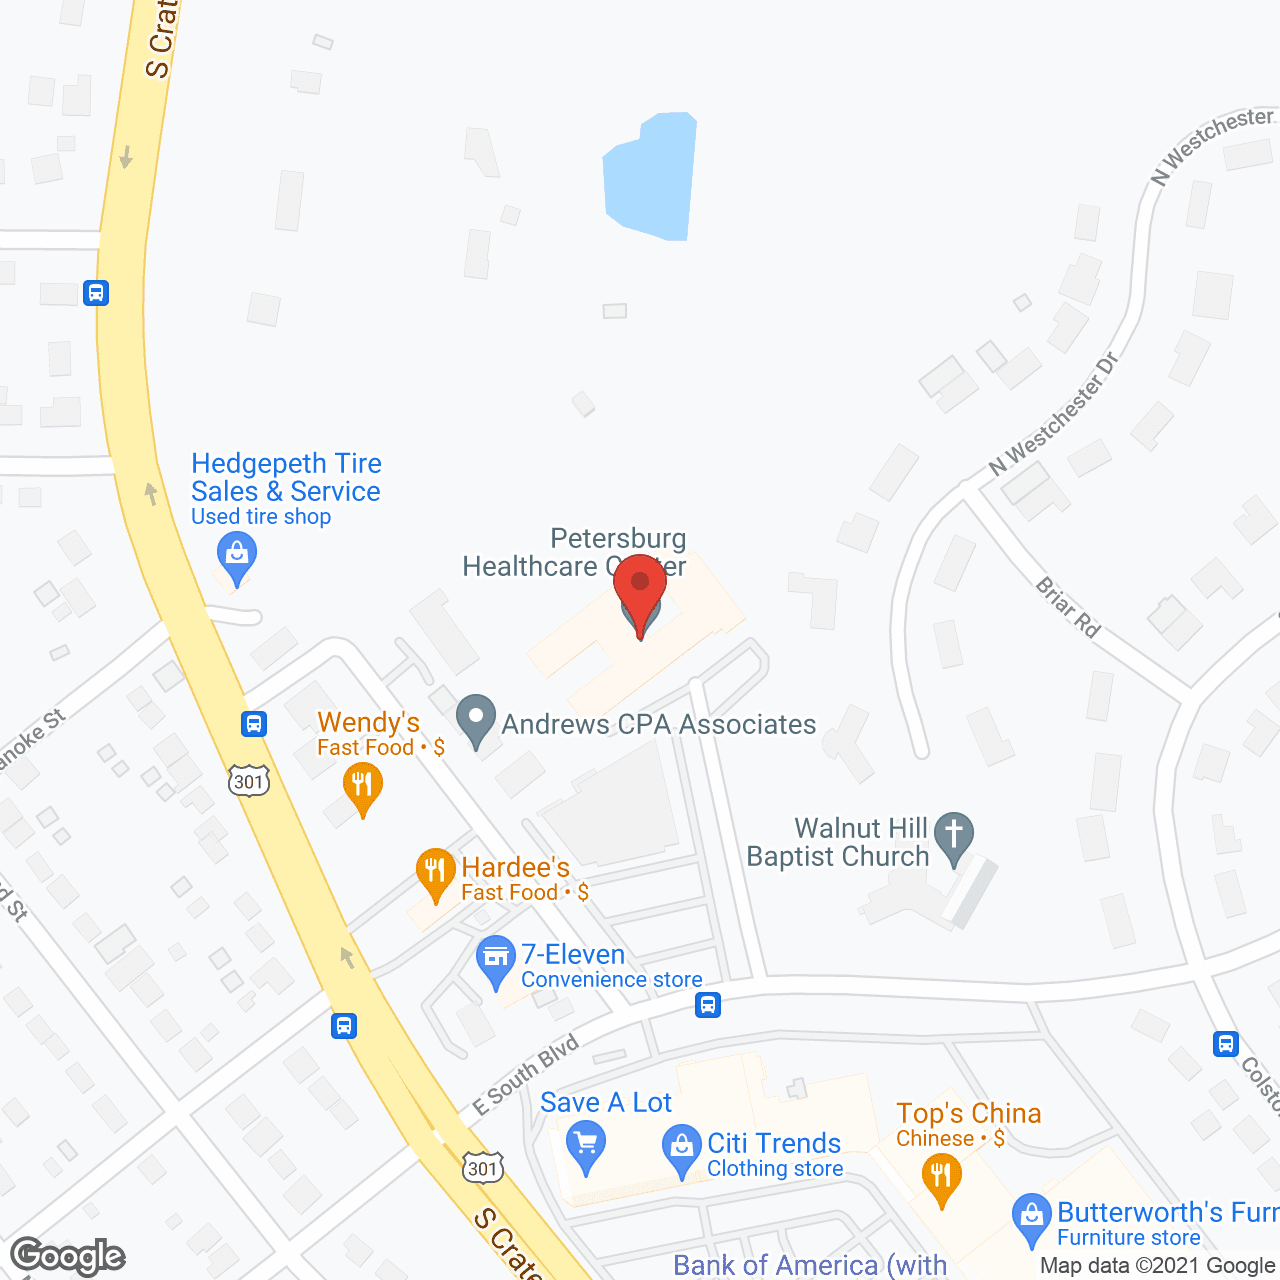 Golden LivingCenter - Petersburg in google map